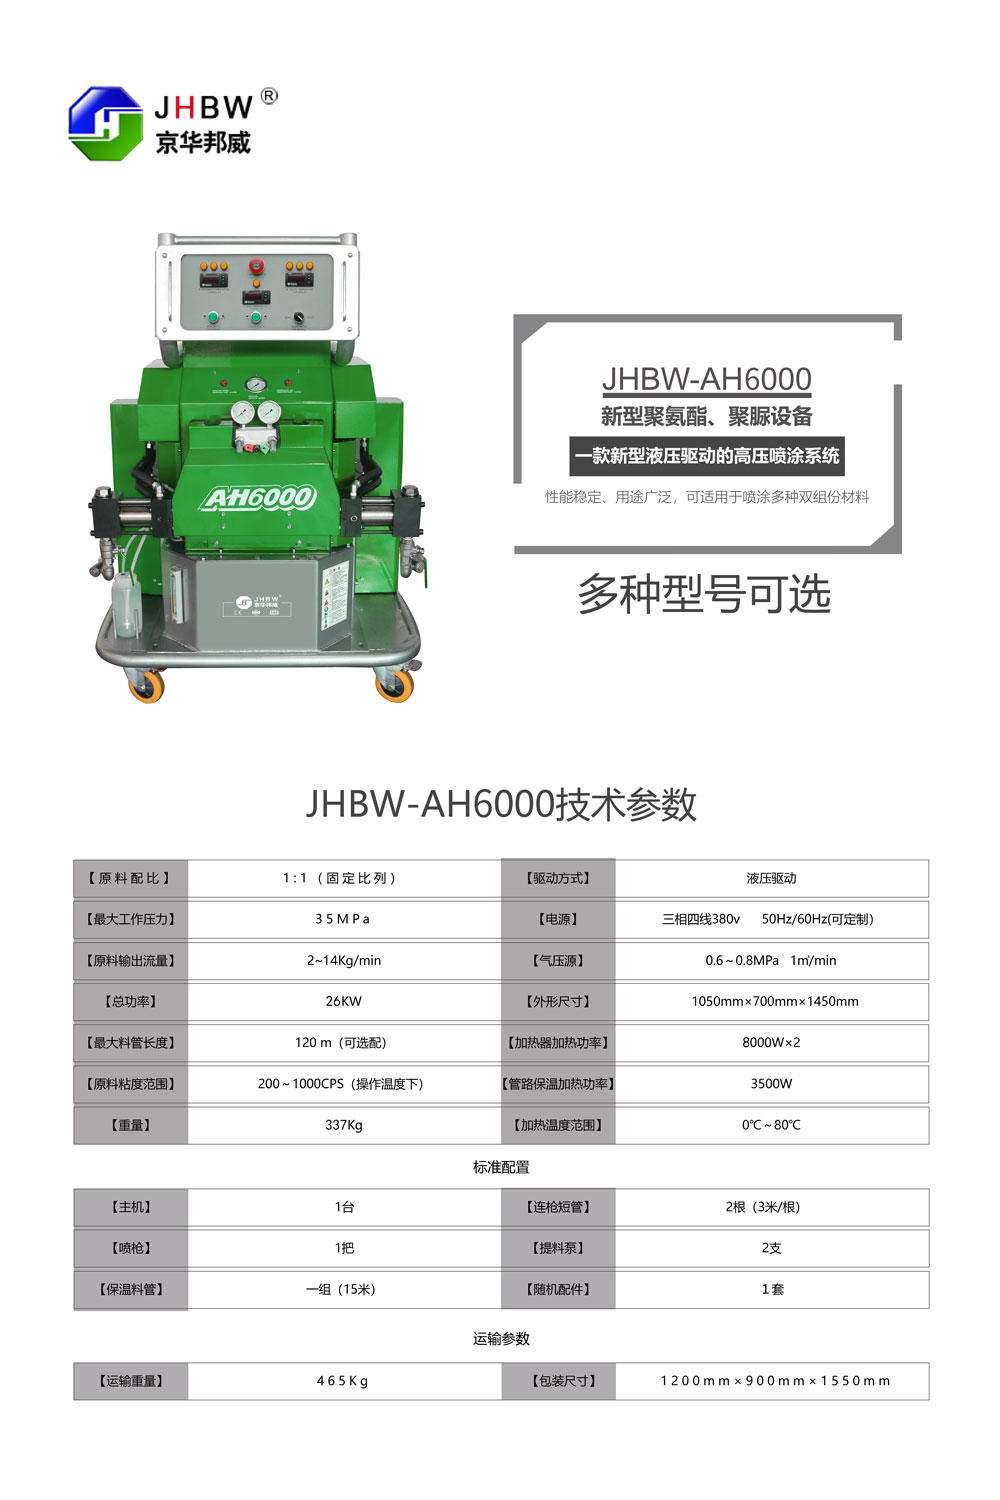 JHBW-AH6000聚氨酯喷涂设备